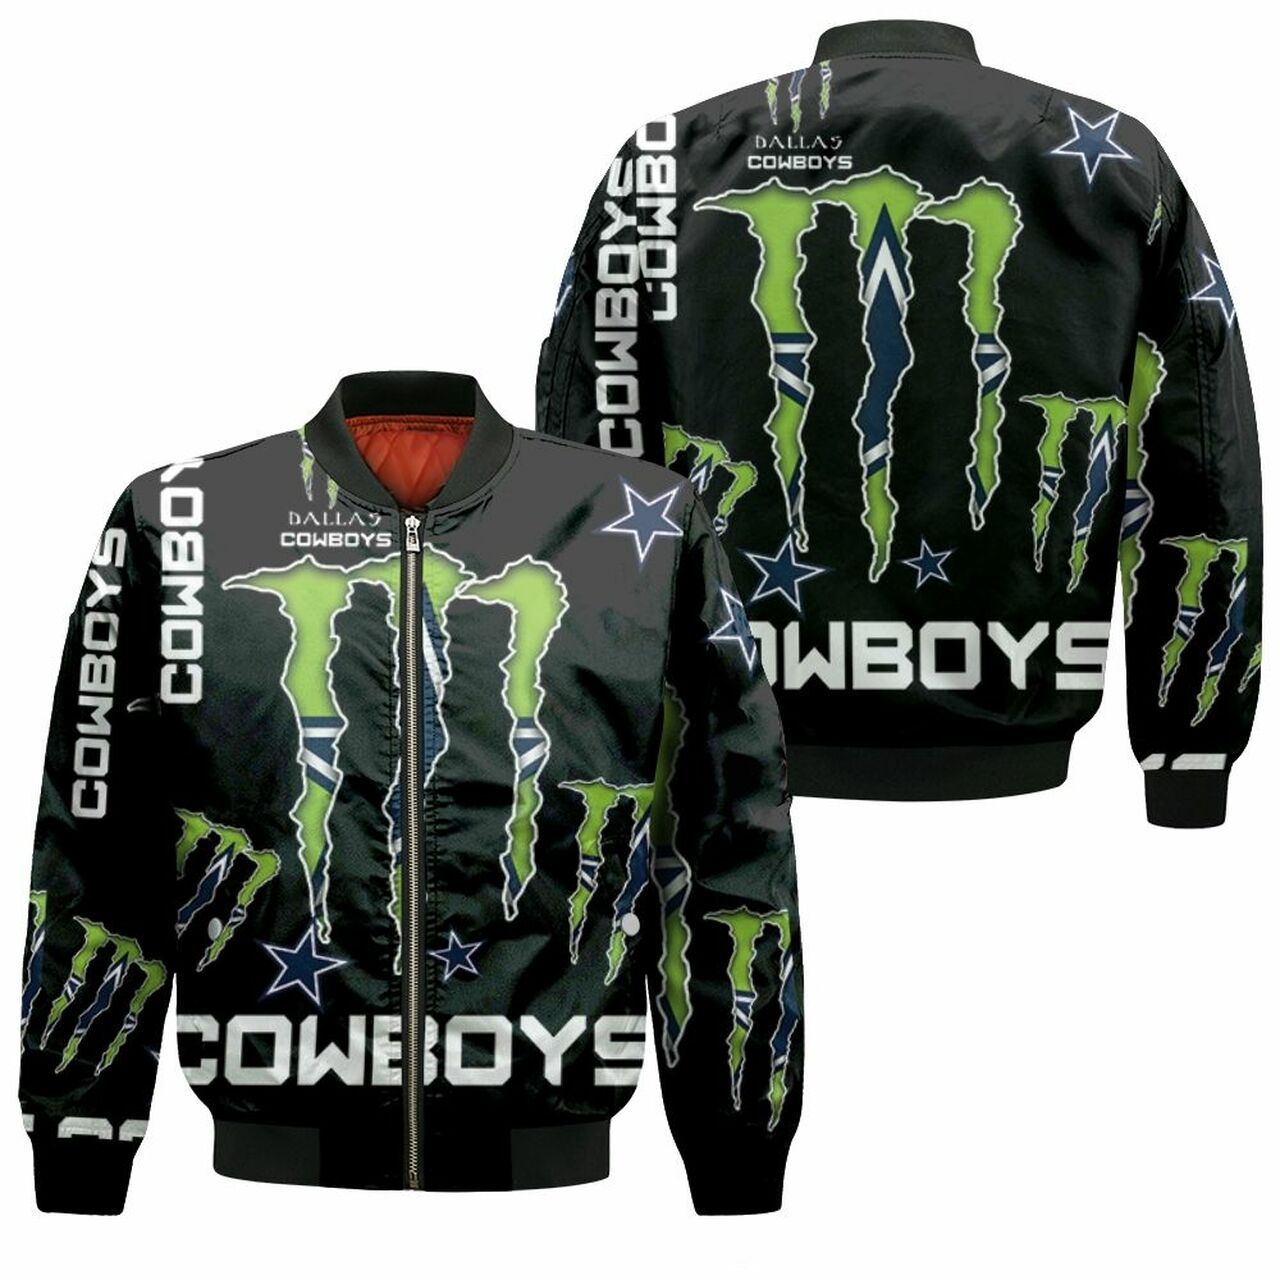 Monster energyogo forovers dallas cowboys bomber jacketodel 3874